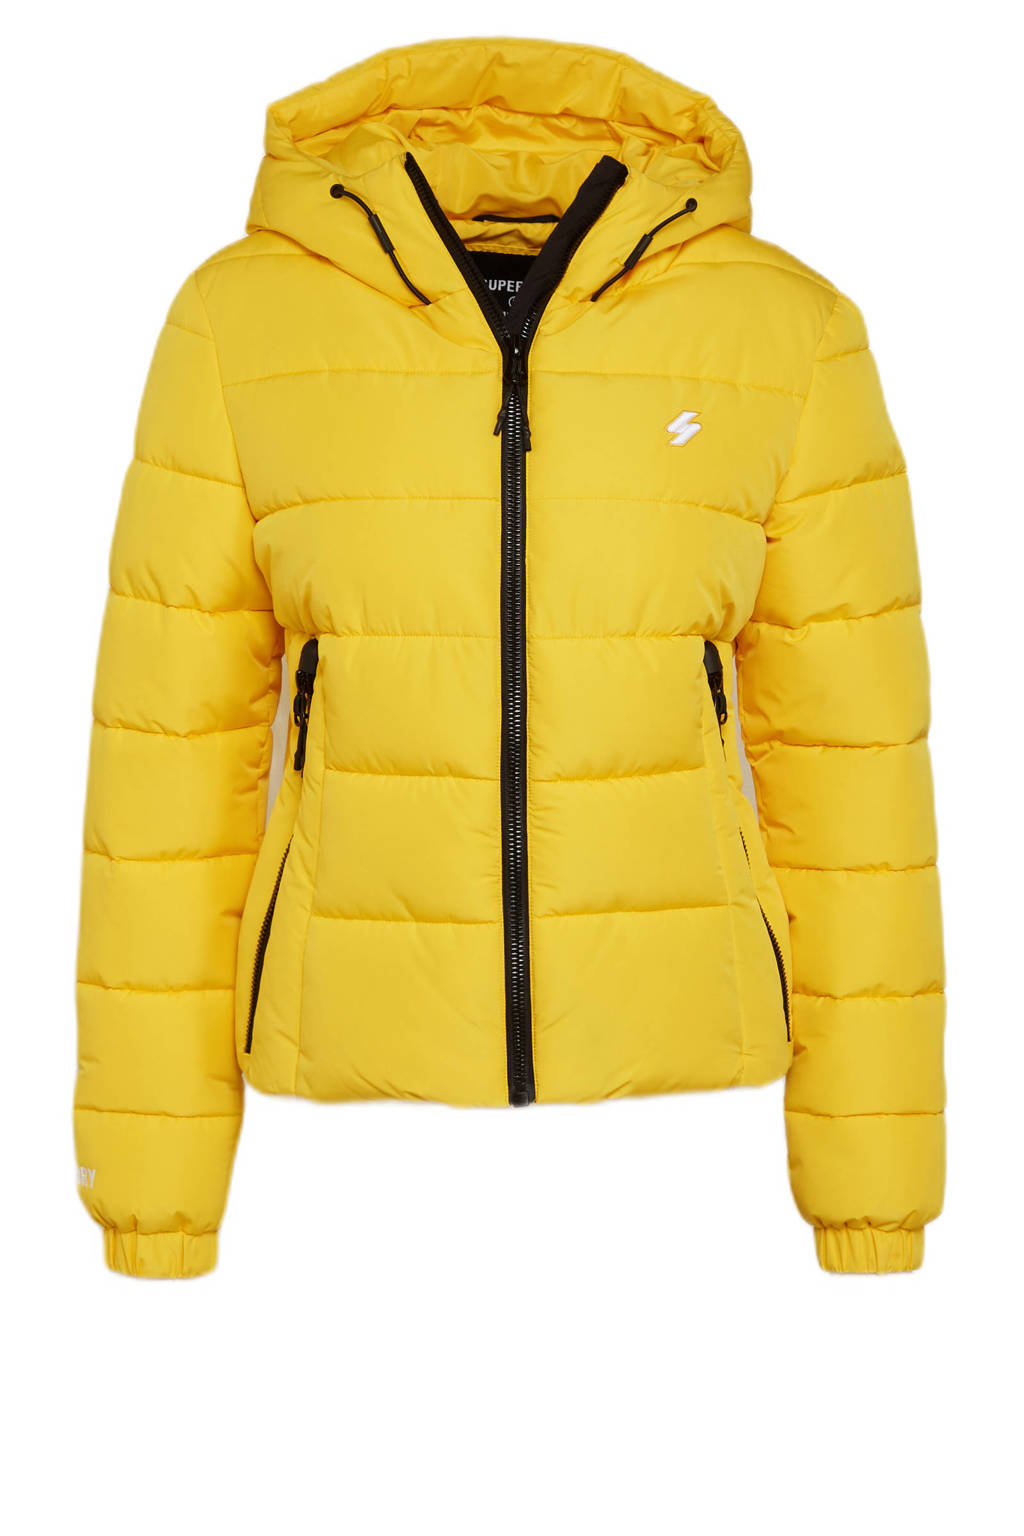 Gele dames Superdry gewatteerde jas van polyester met lange mouwen, capuchon, ritssluiting en doorgestikte details